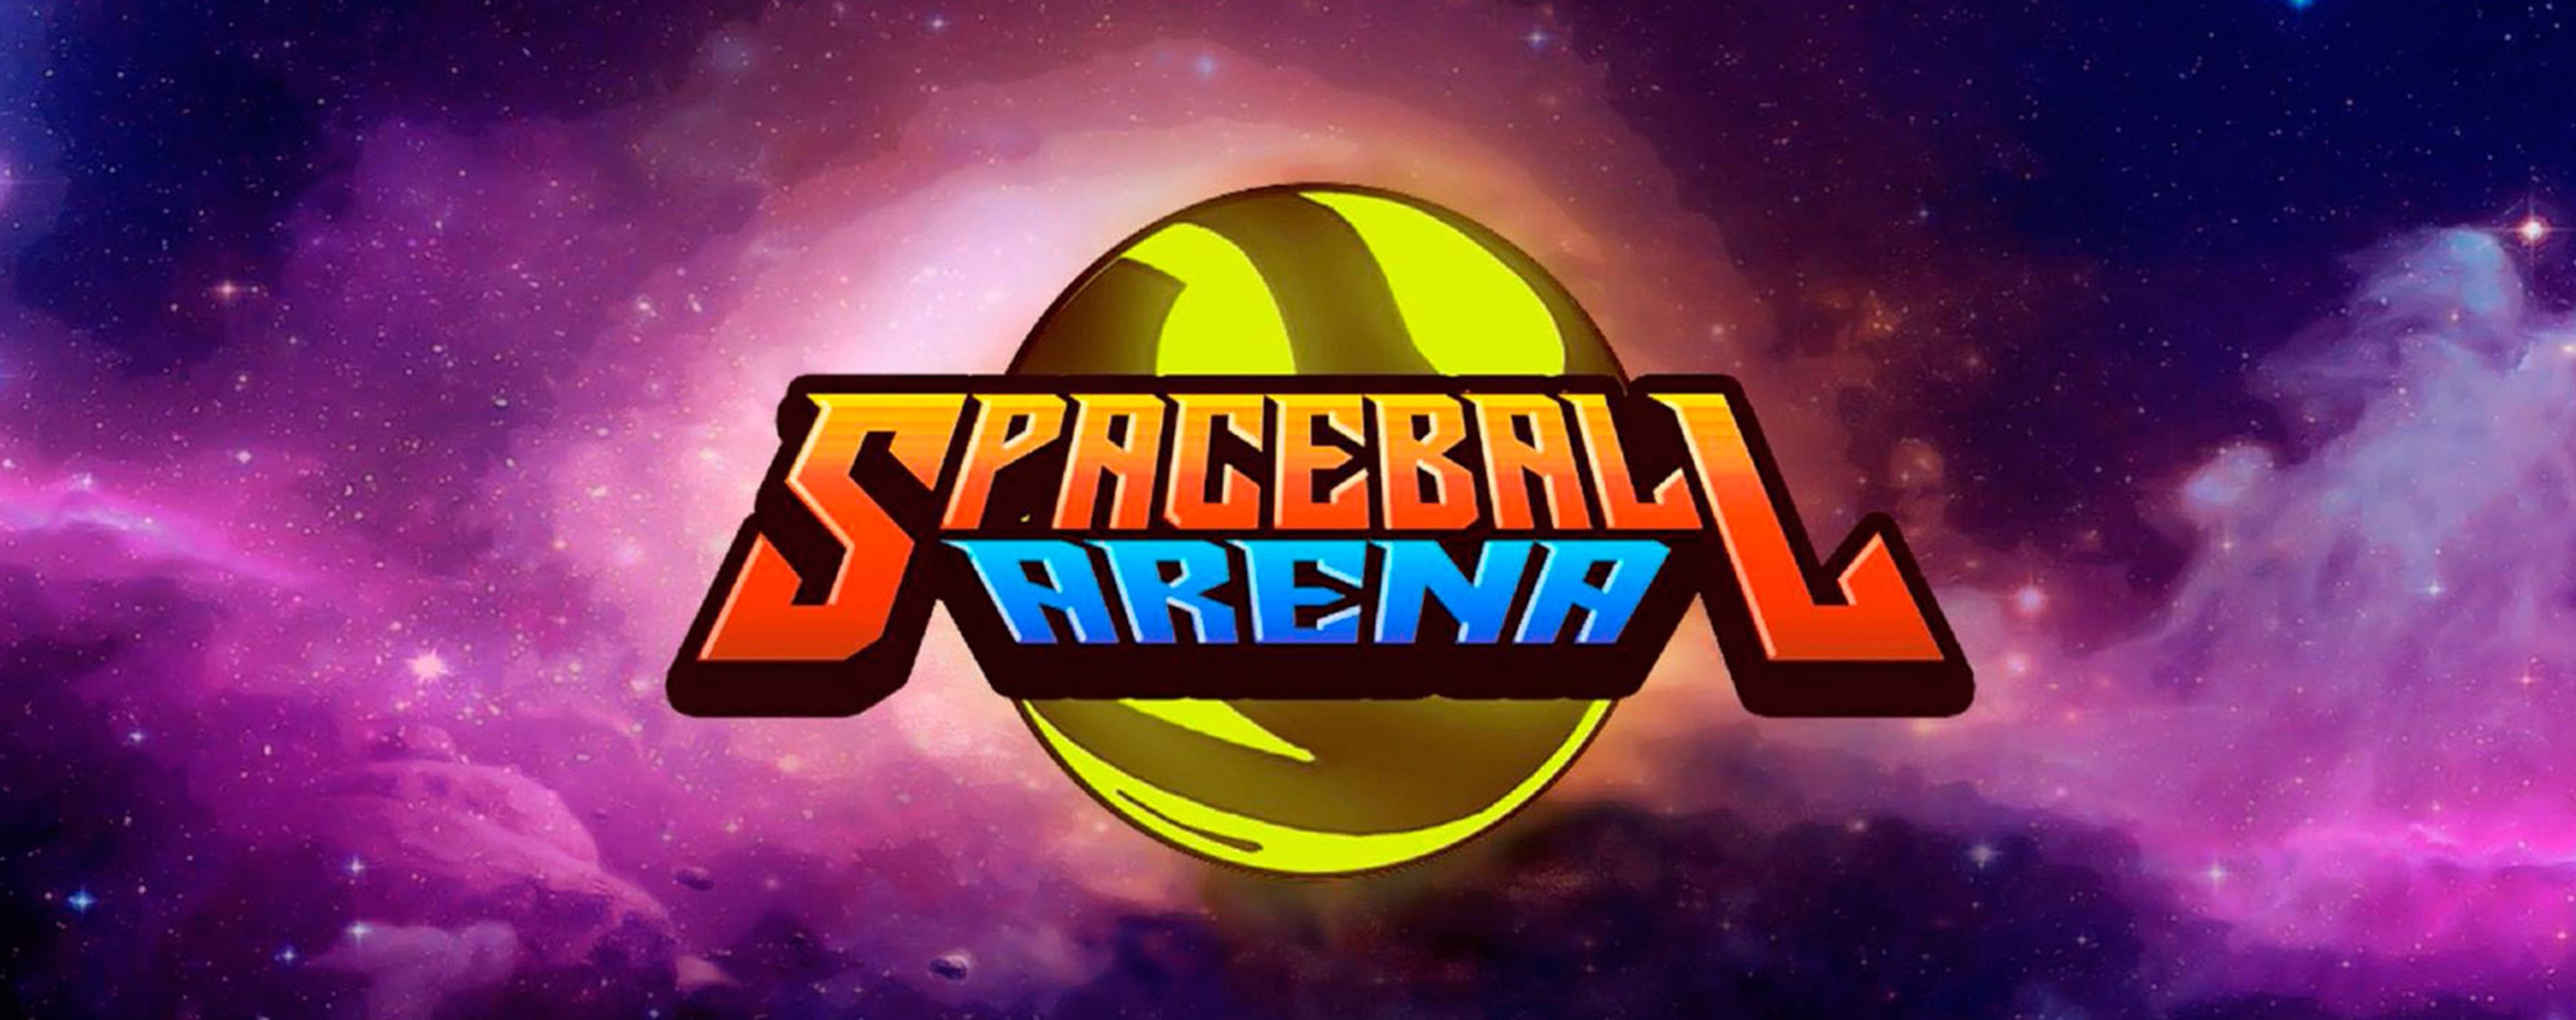 Spaceball Arena